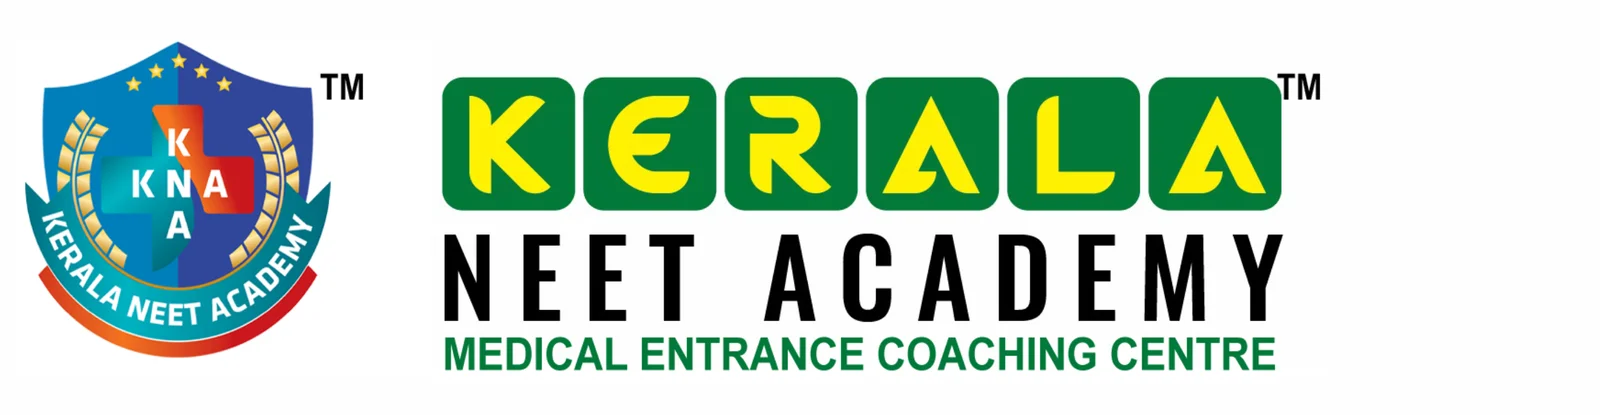 a logo of advantage integrated marketings client kerala neet academy - AD Vantage